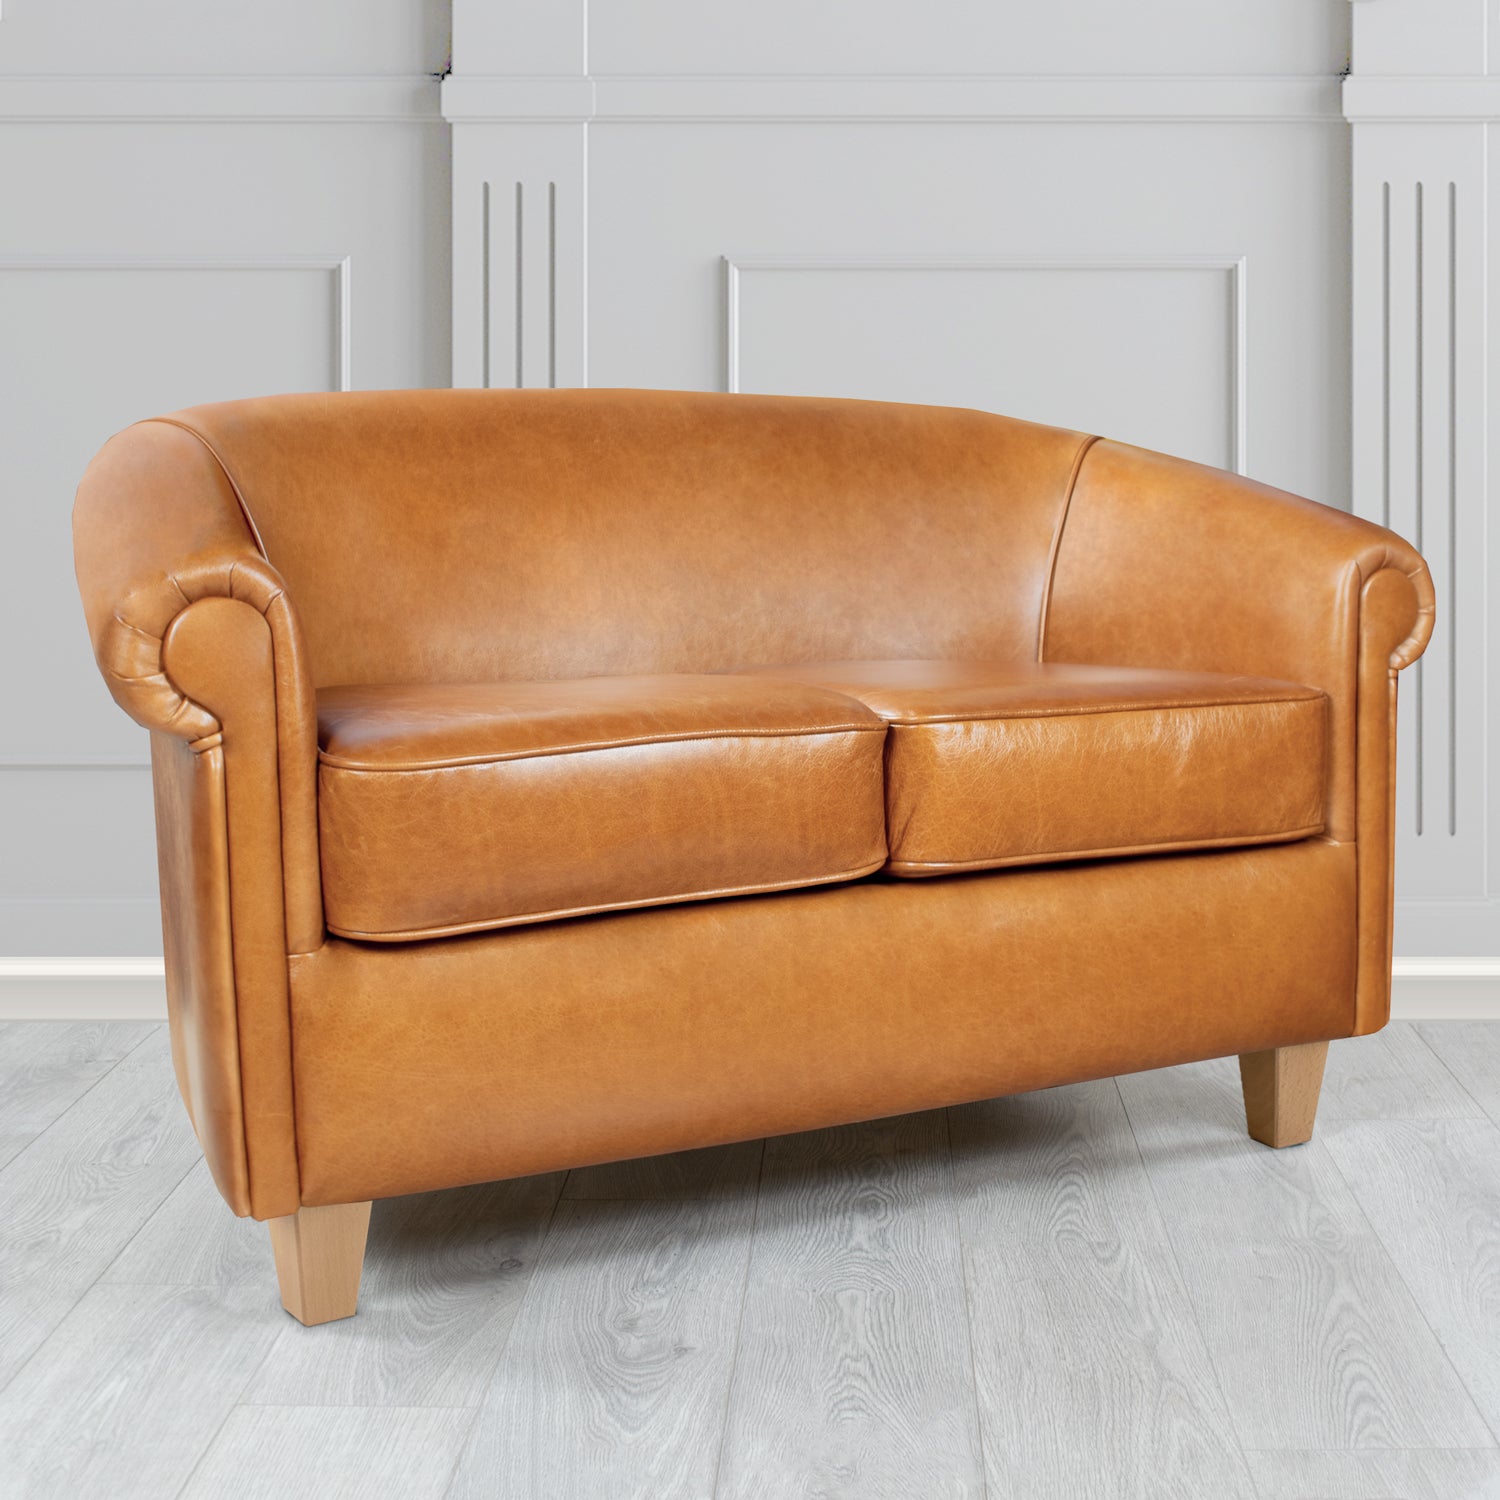 Siena 2 Seater Tub Sofa in Crib 5 Old English Buckskin Genuine Leather - The Tub Chair Shop